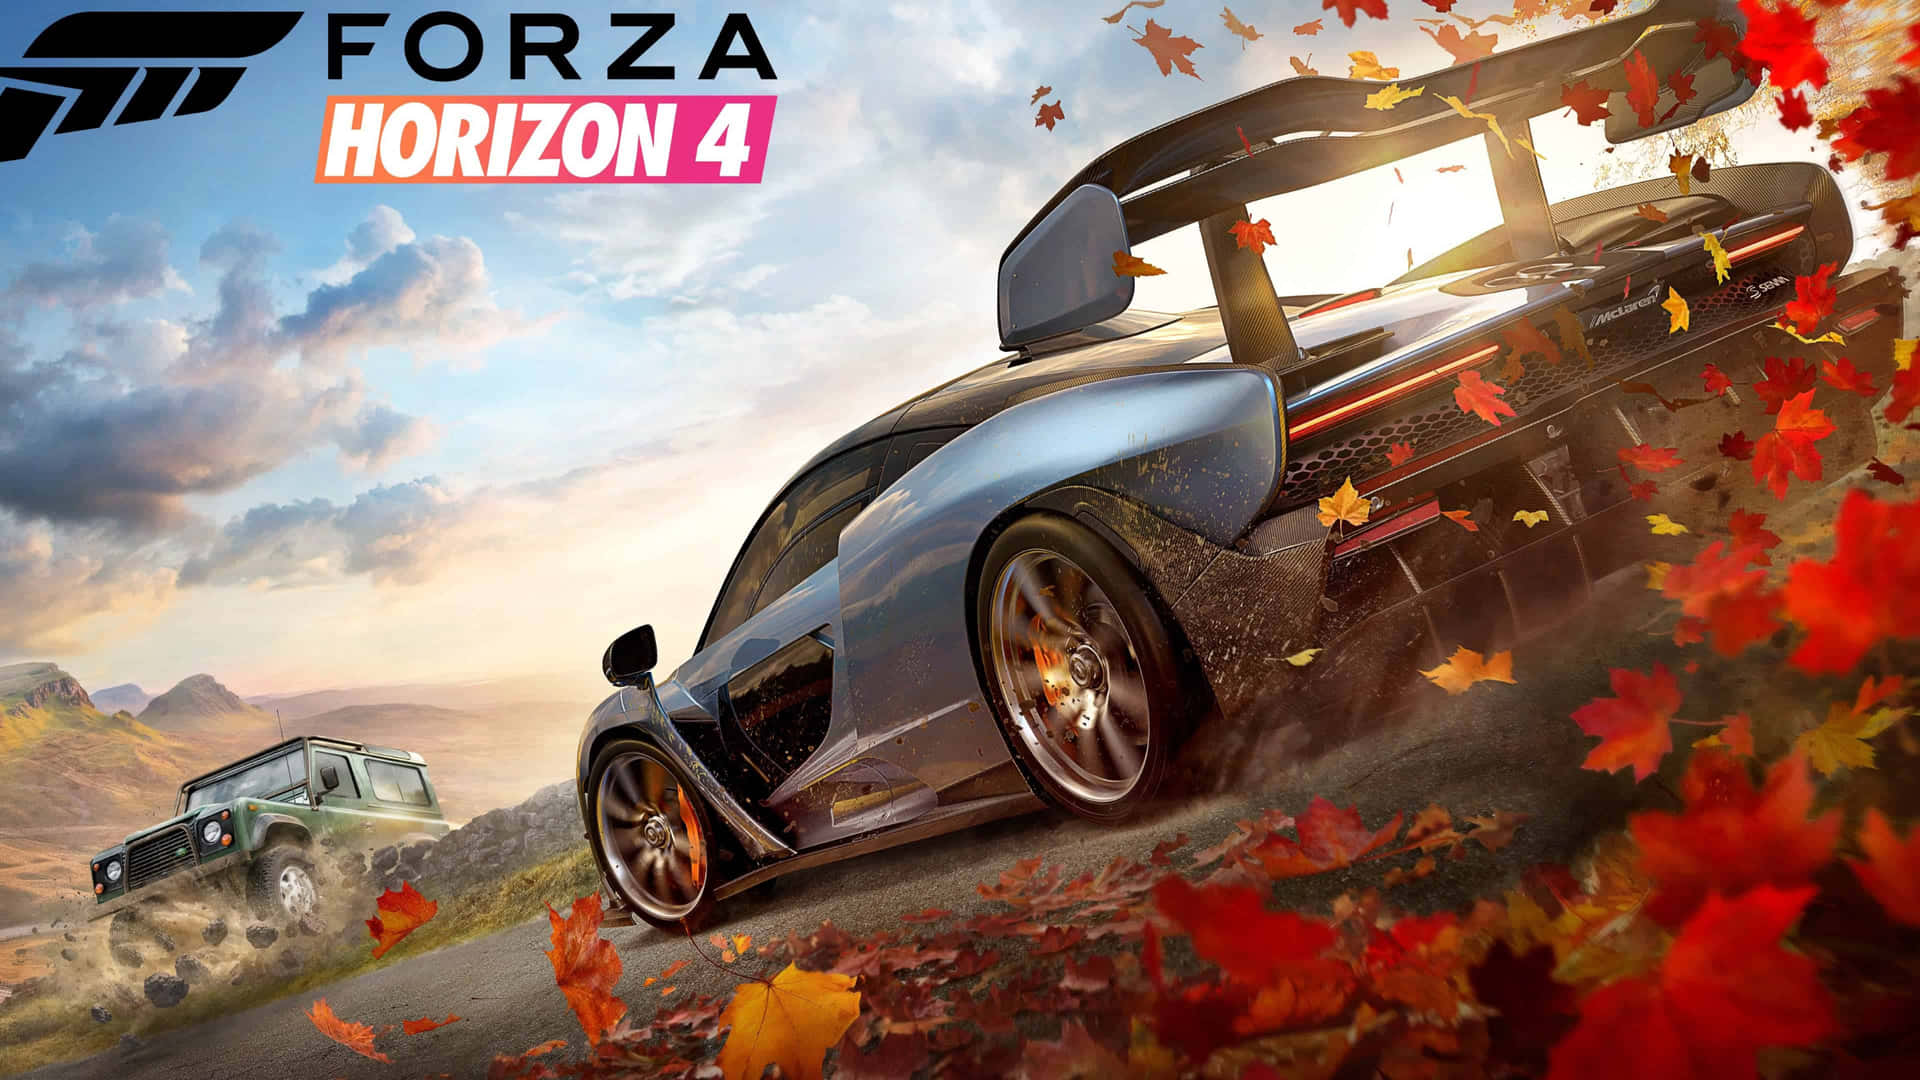 Forza Horizon 4 - Pc - Pc - Pc - Pc - Pc - Wallpaper